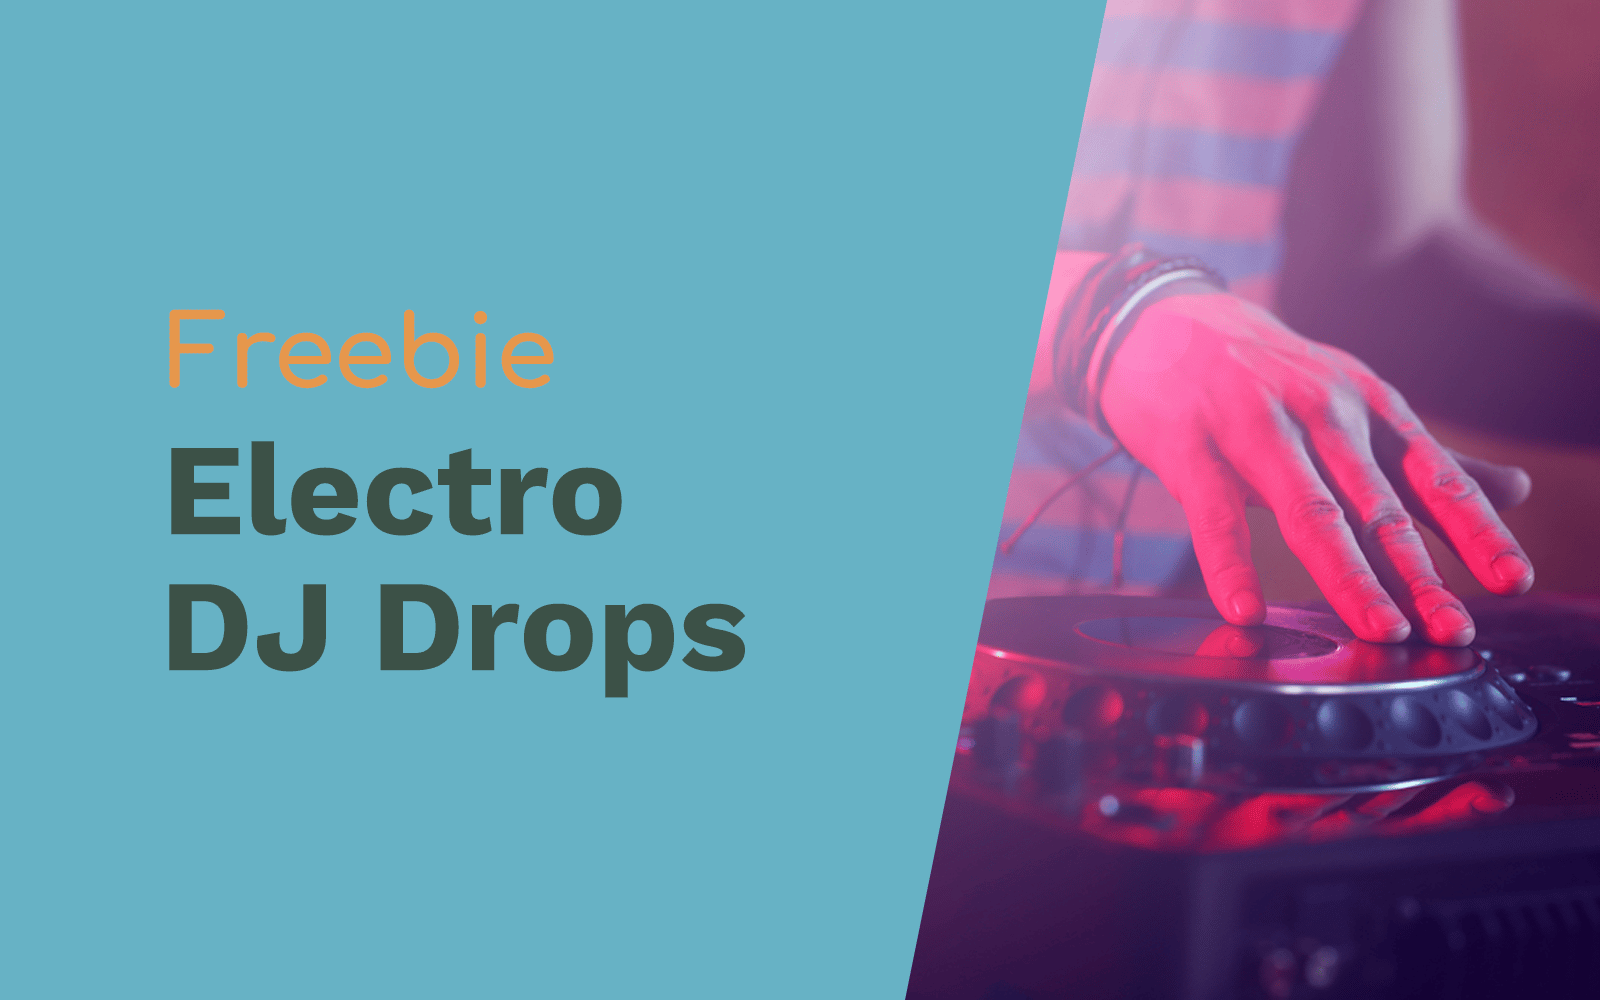 Electro DJ Drops DJ Drops dj drops Music Radio Creative